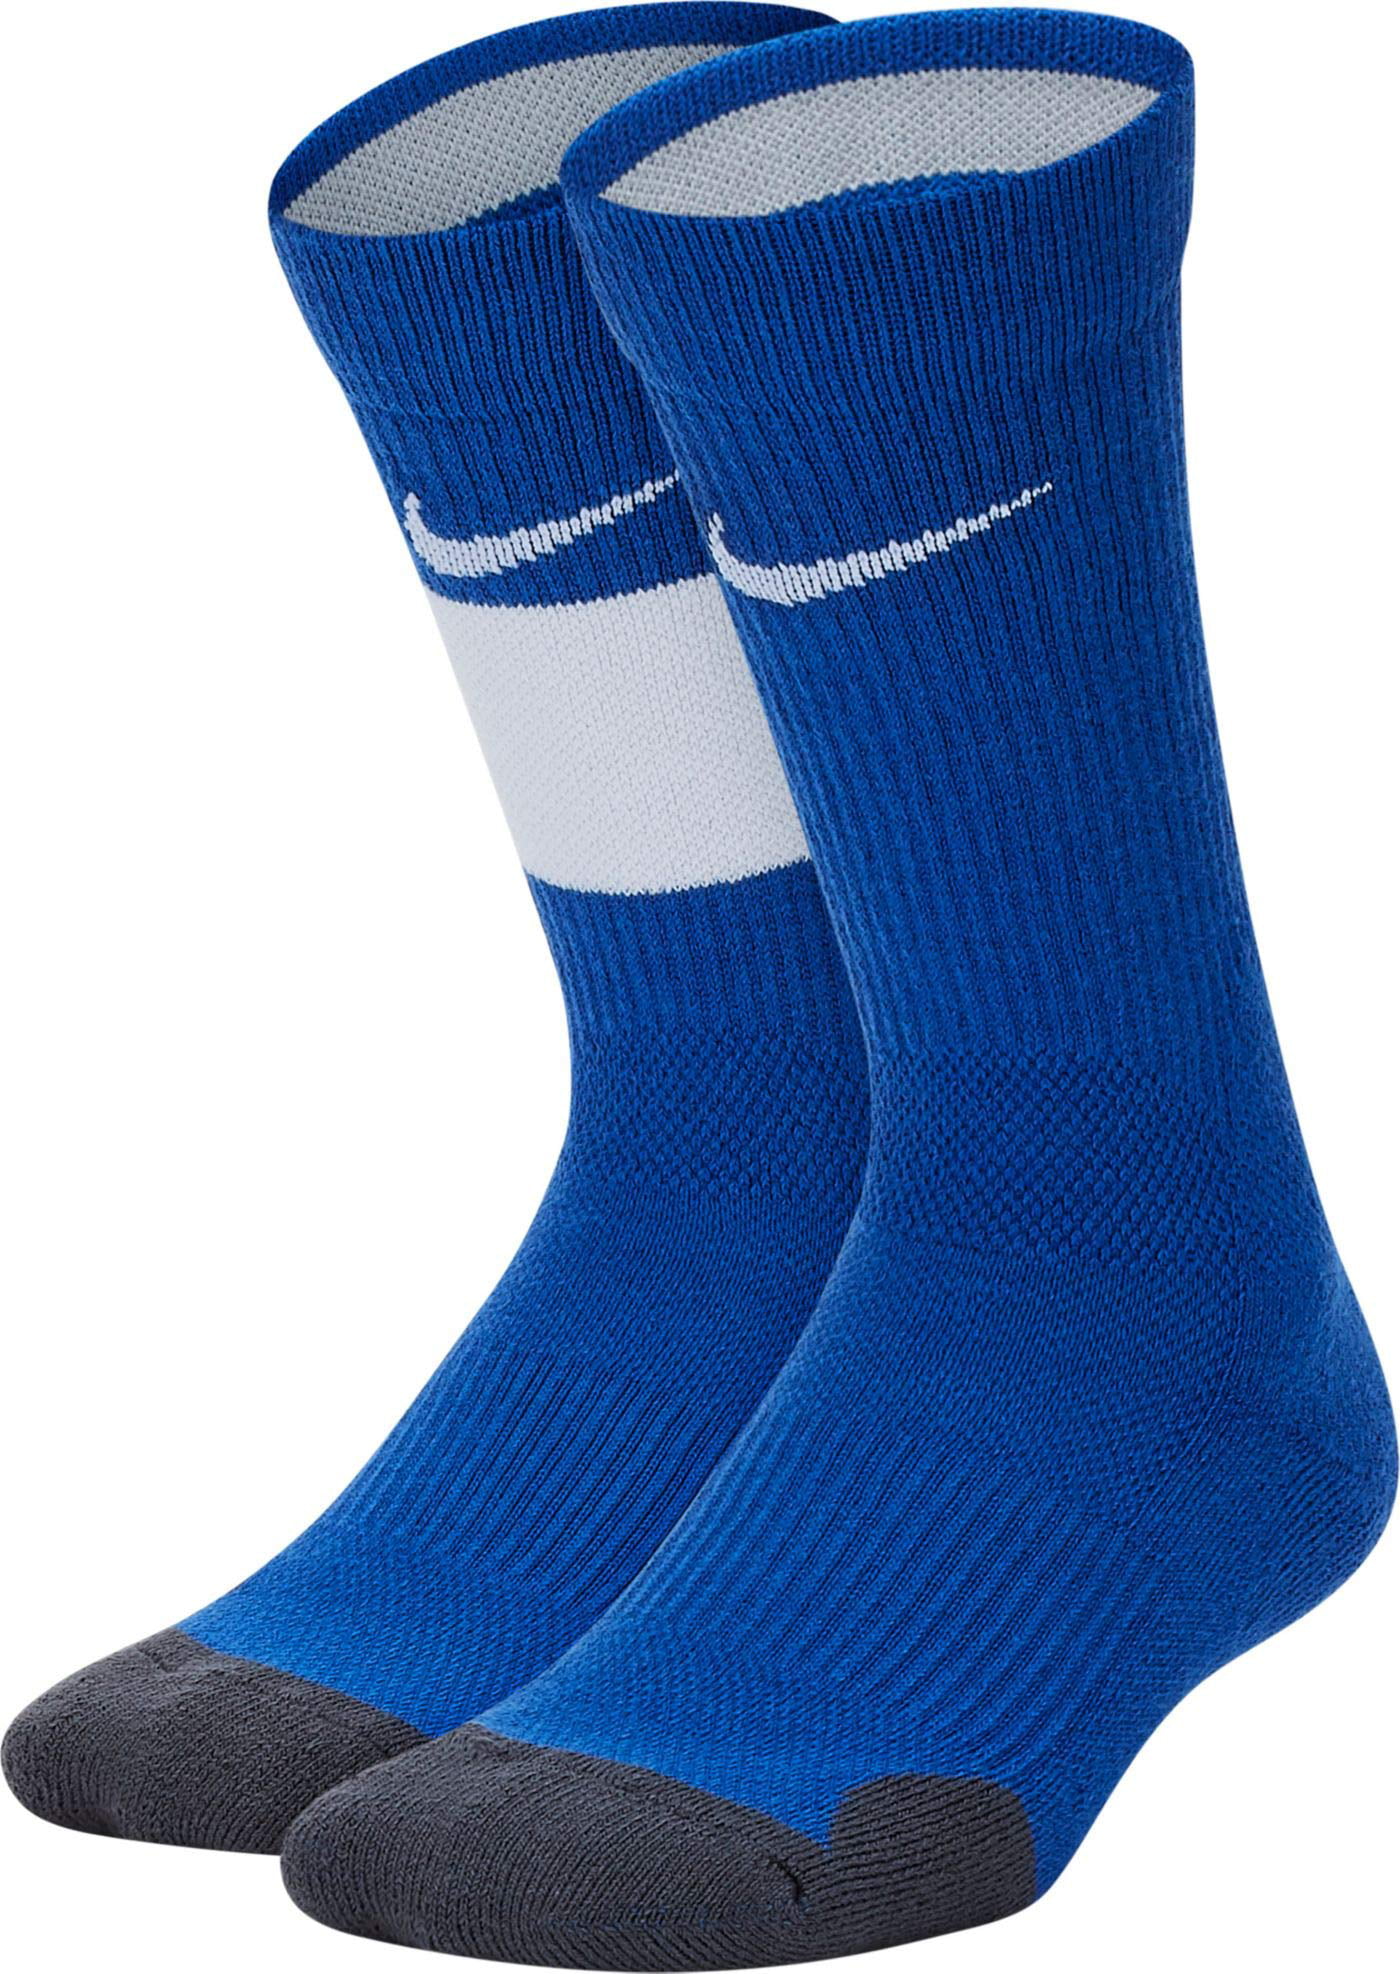 size 5 nike socks